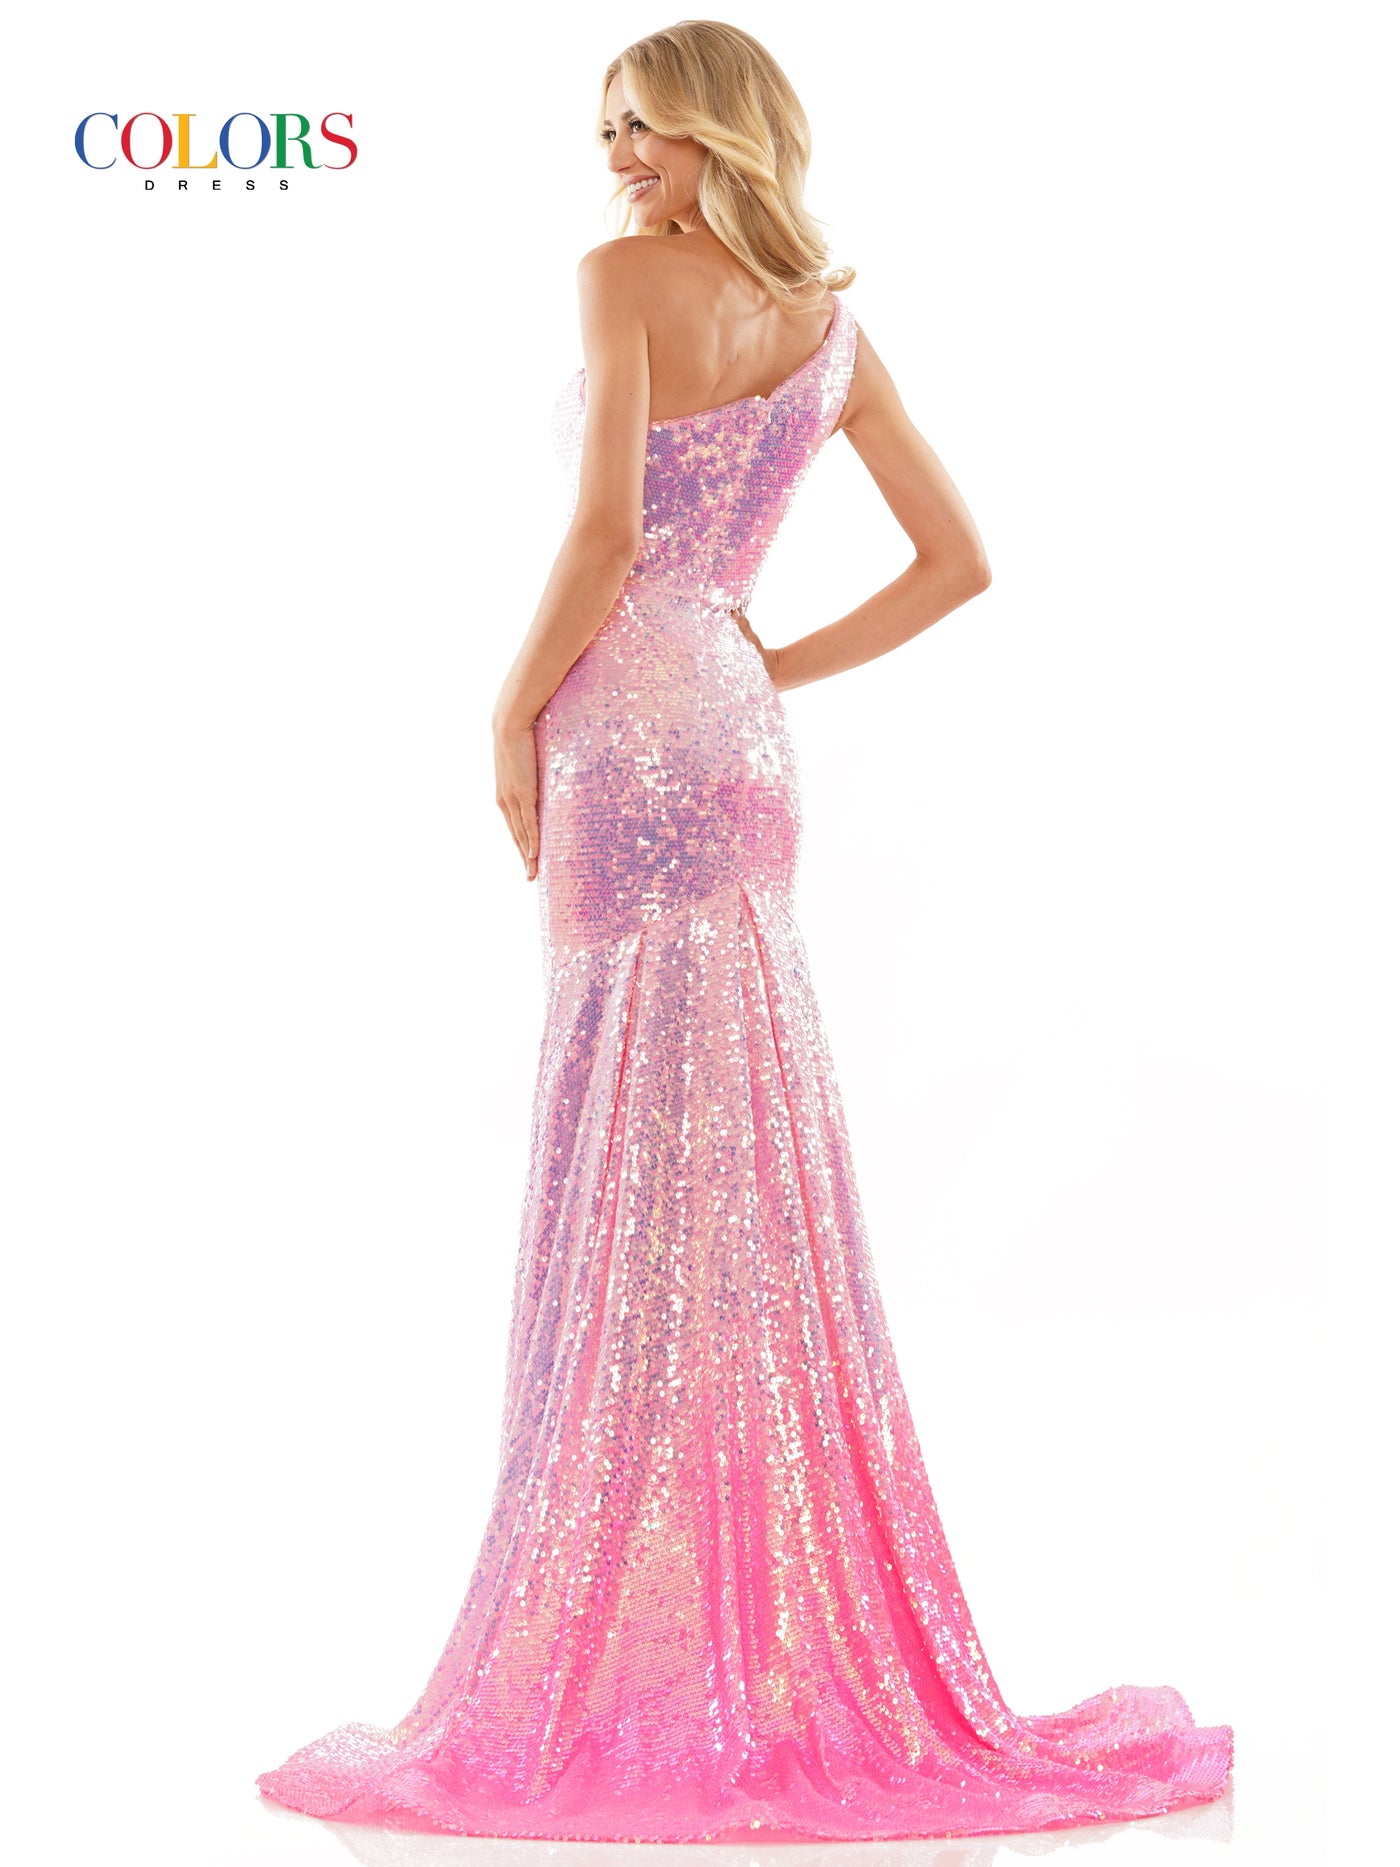 Colors Dress 2984 Pink Sequins Prom Dress